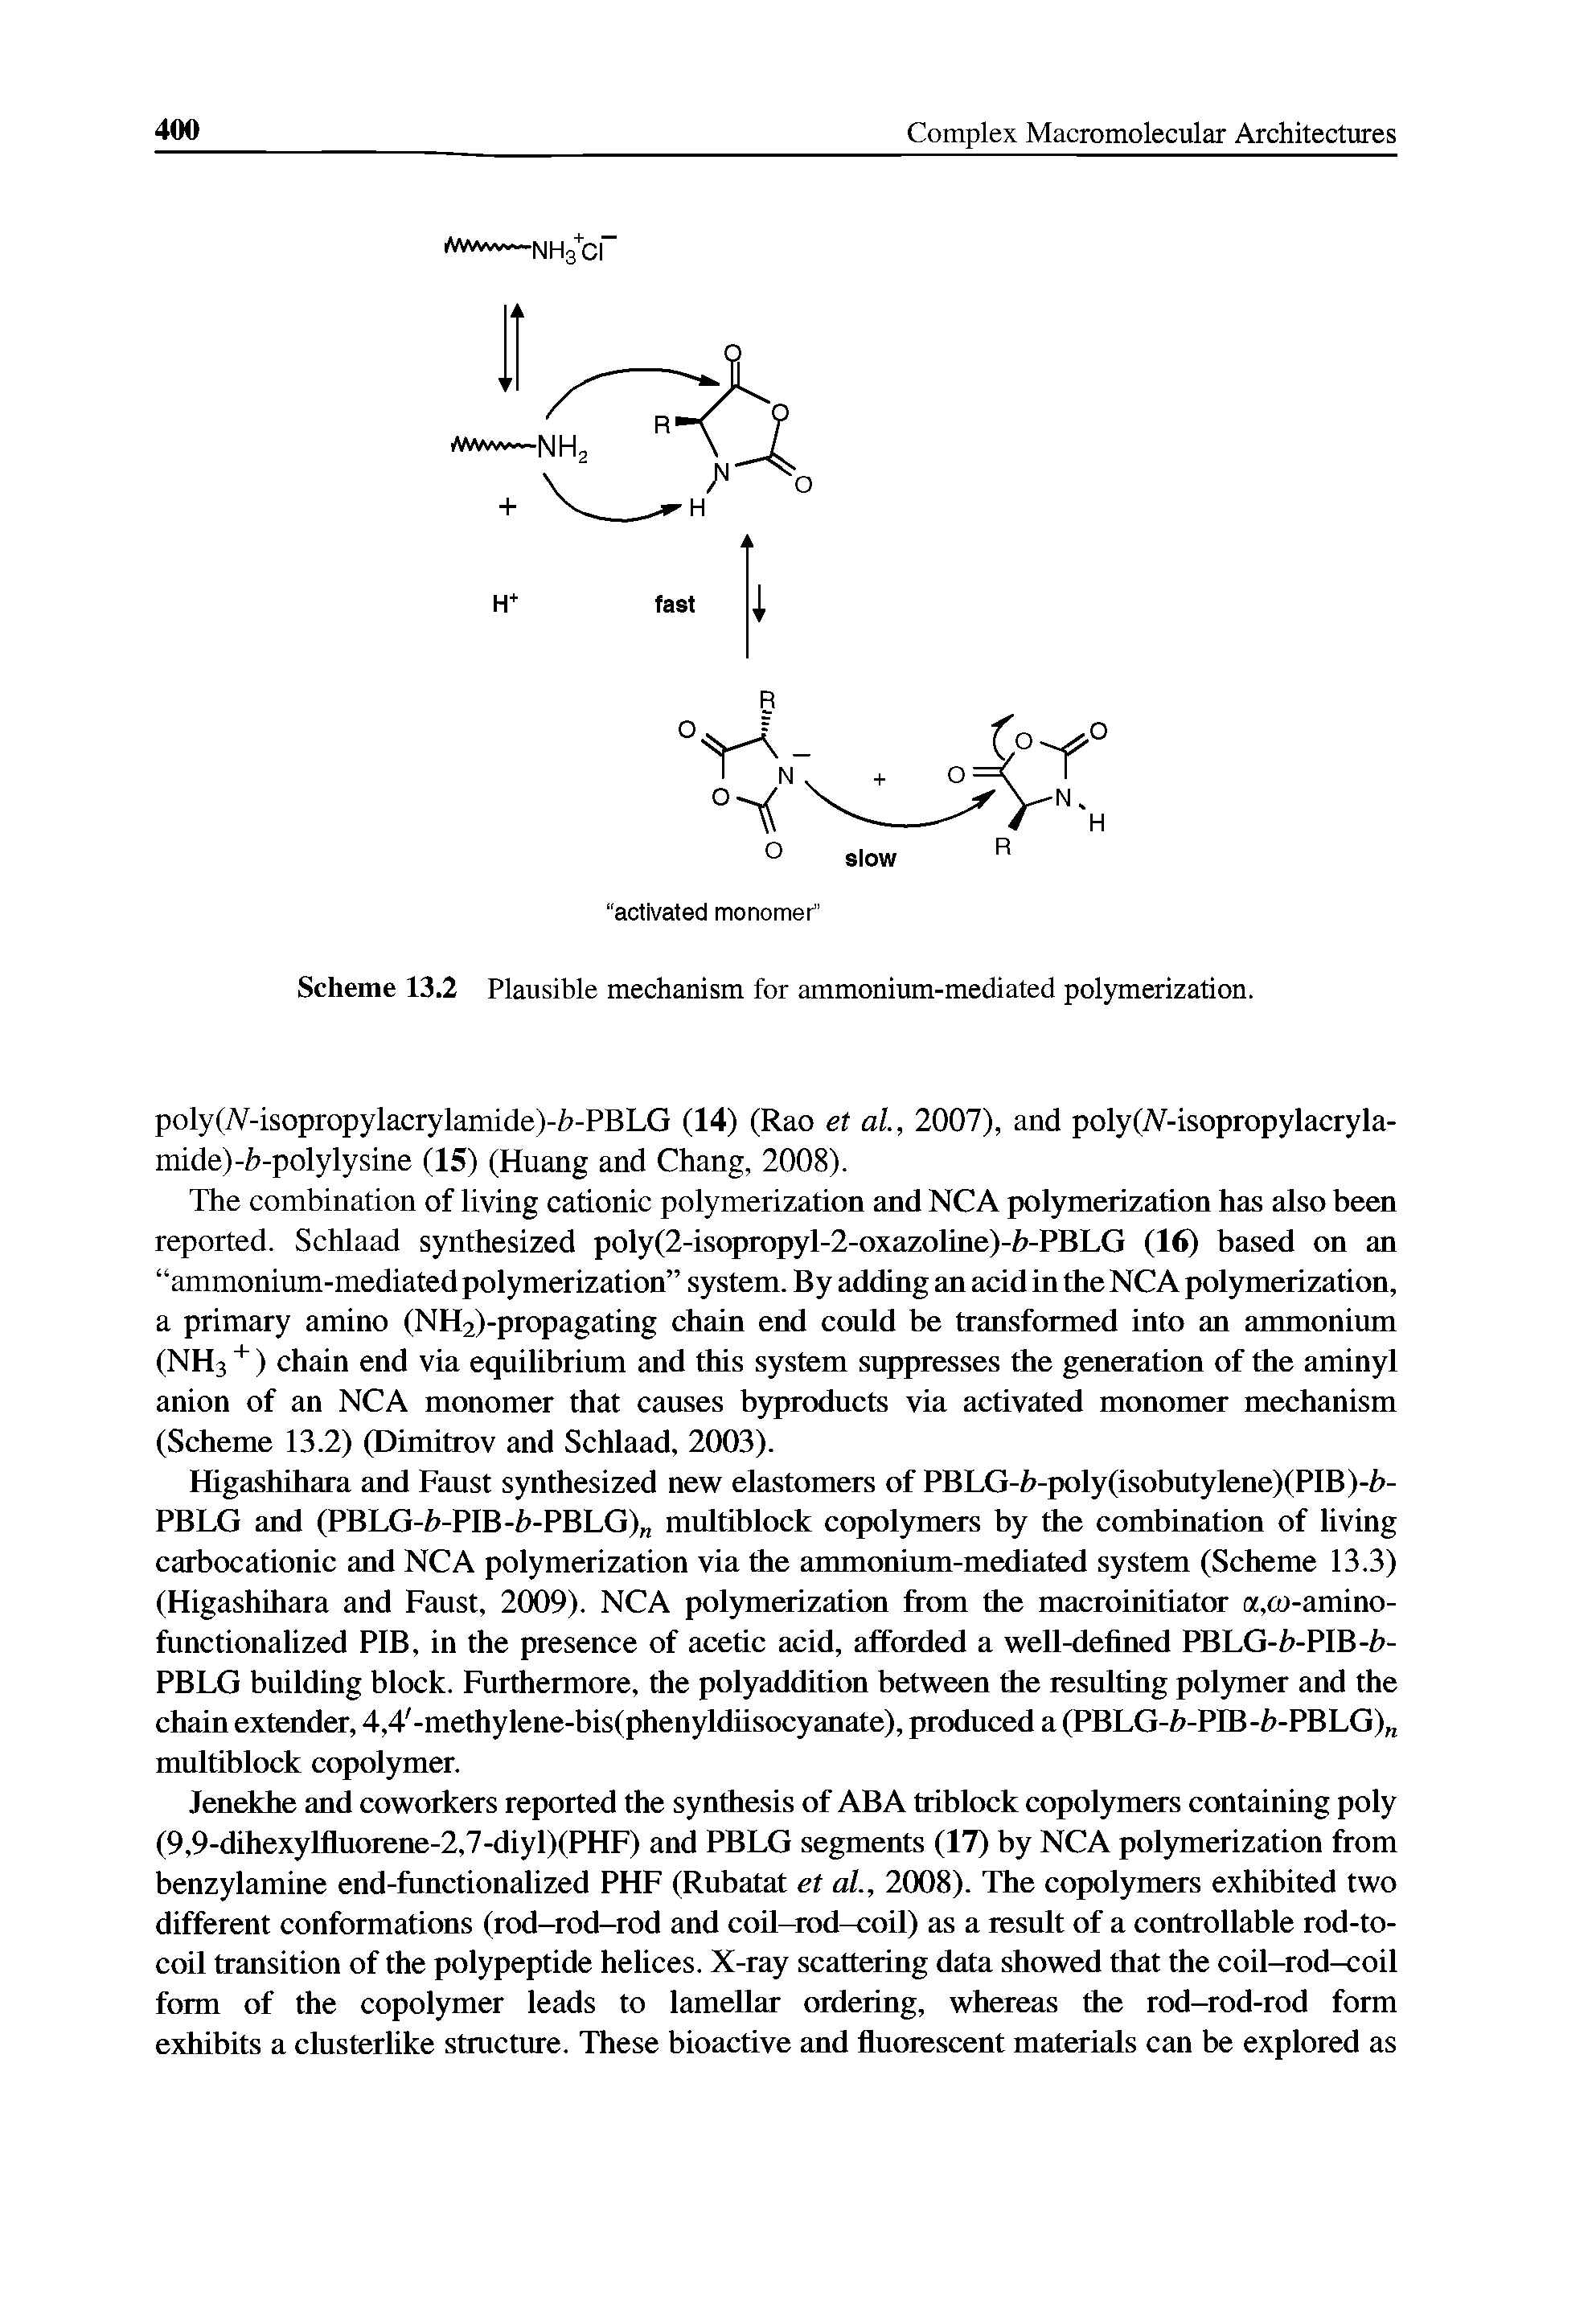 Scheme 13.2 Plausible mechanism for ammonium-mediated polymerization.